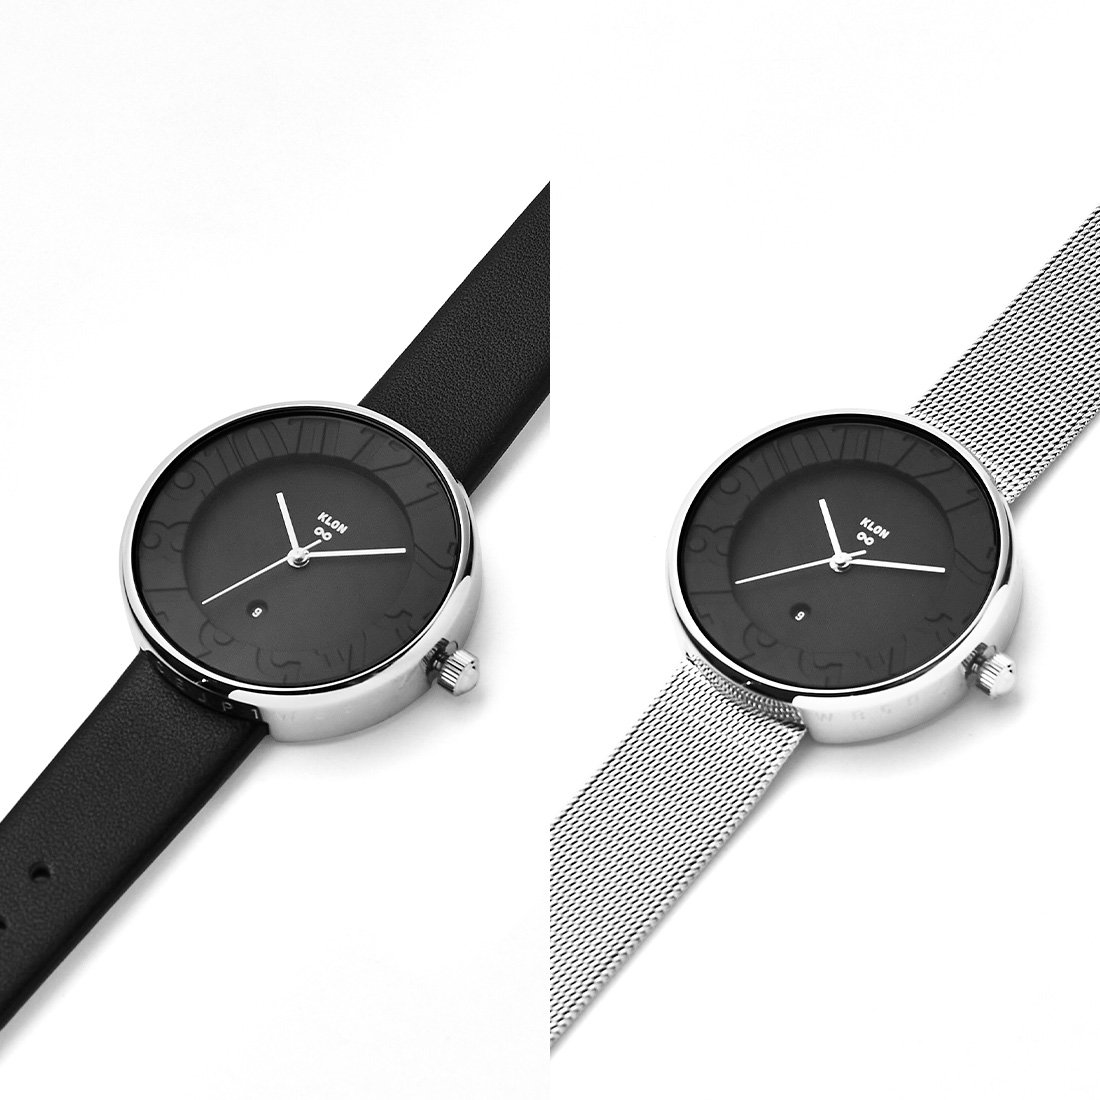 KLON INFINITY STAIR series -STANDARD- [36/B-FACE] カジュアル 腕時計